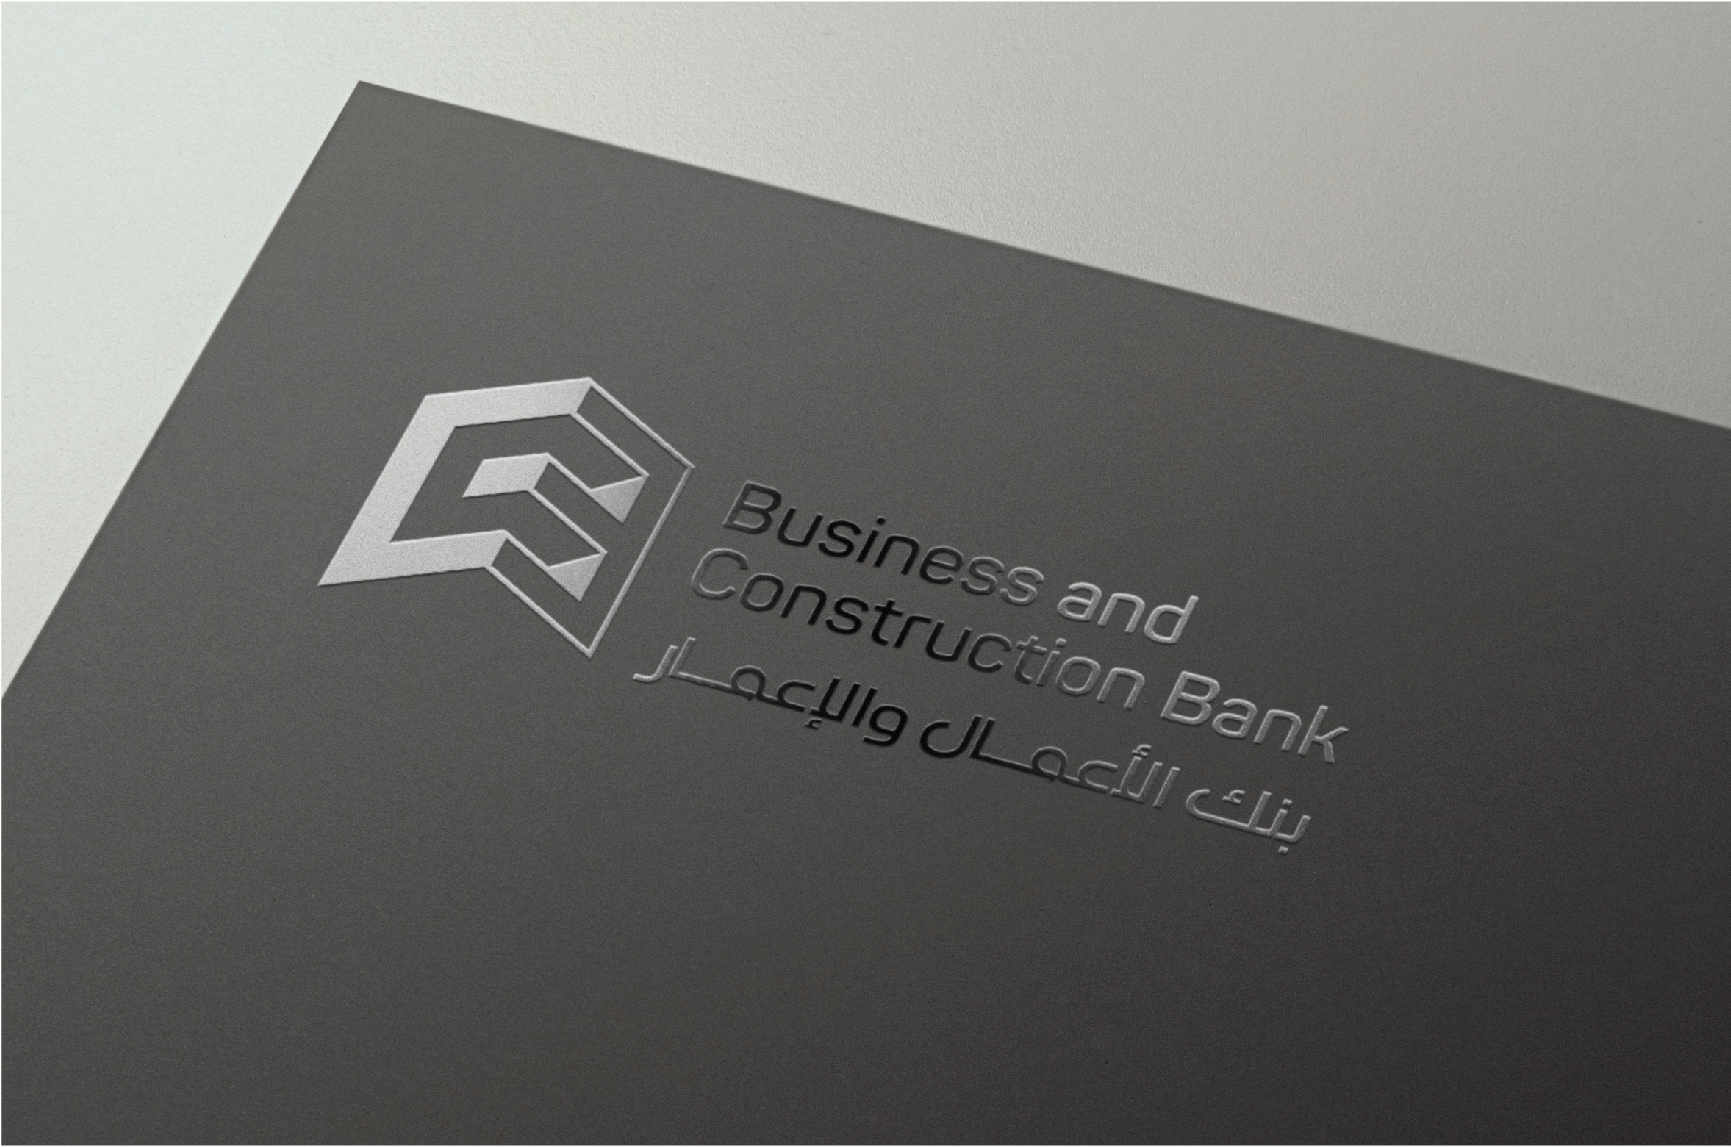 communi8 client business and construction bank